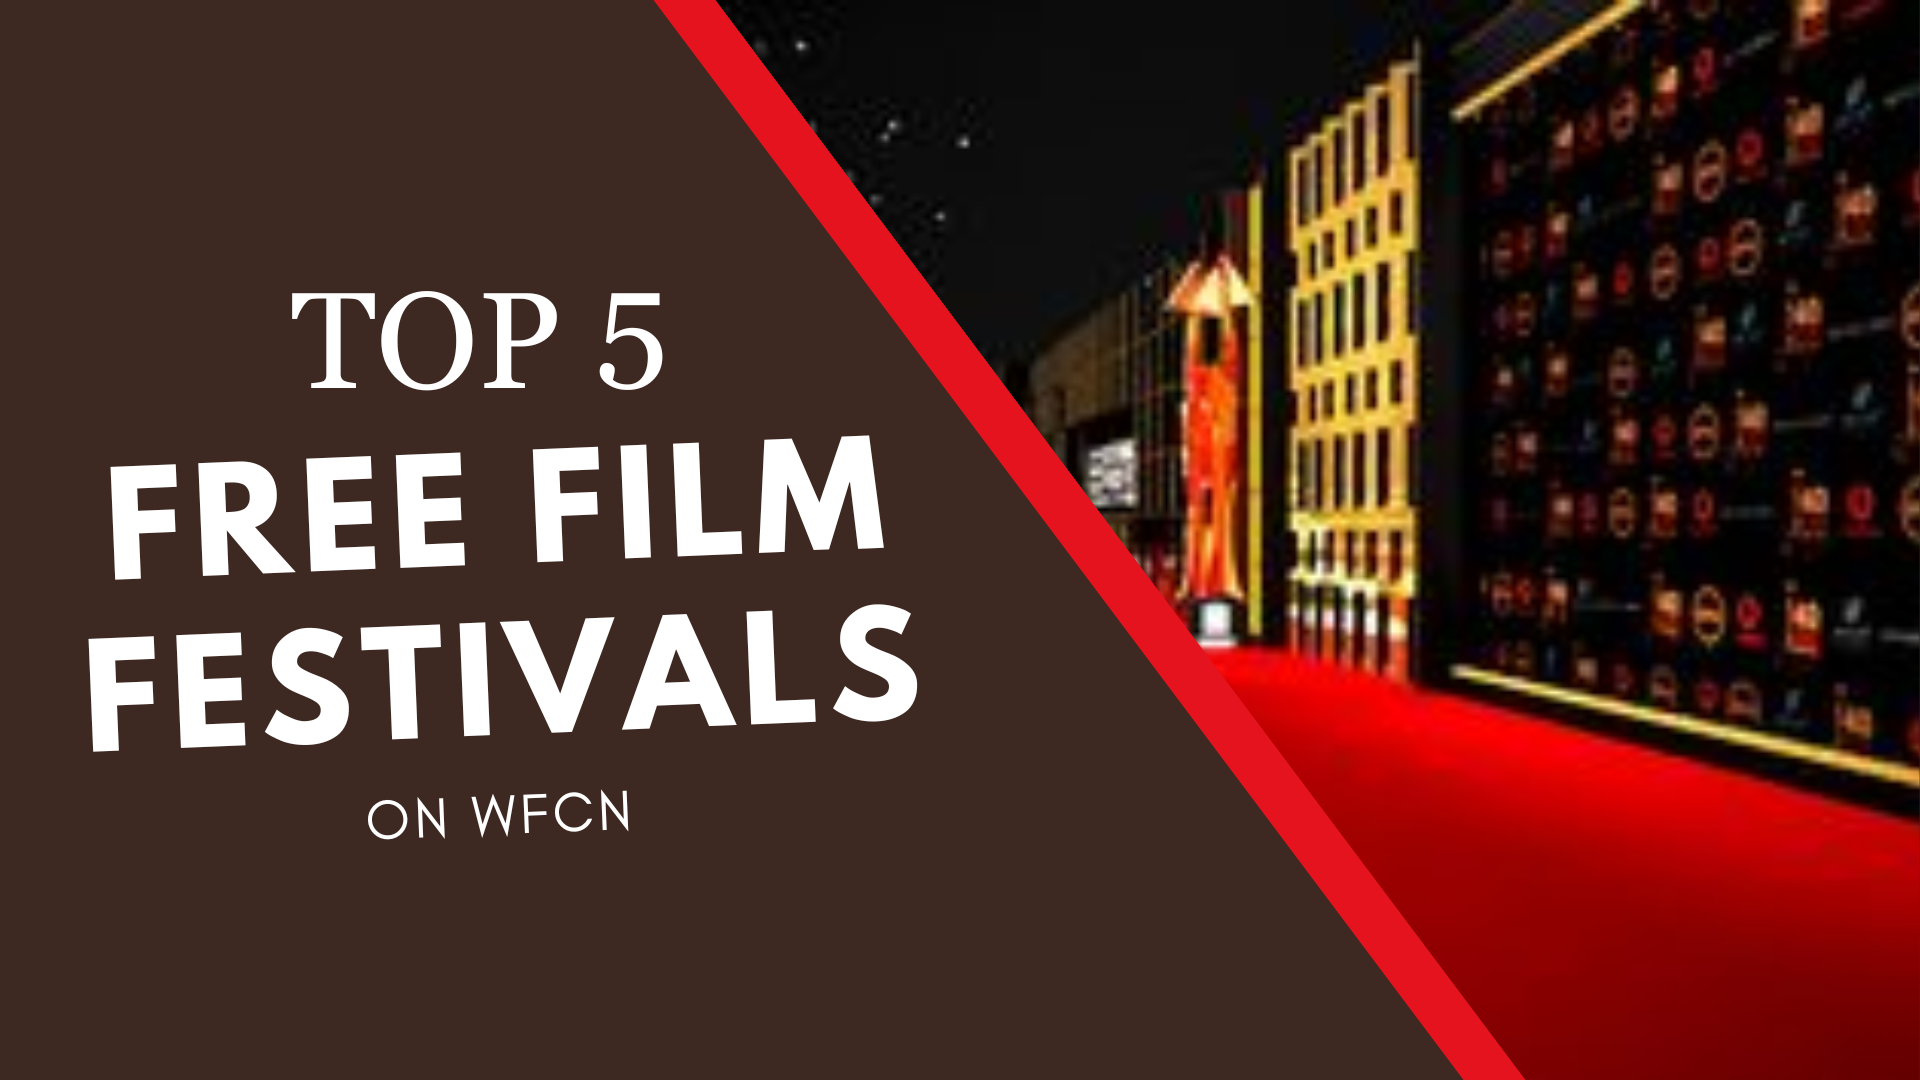 Top 5 Free Film Festivals on WFCN